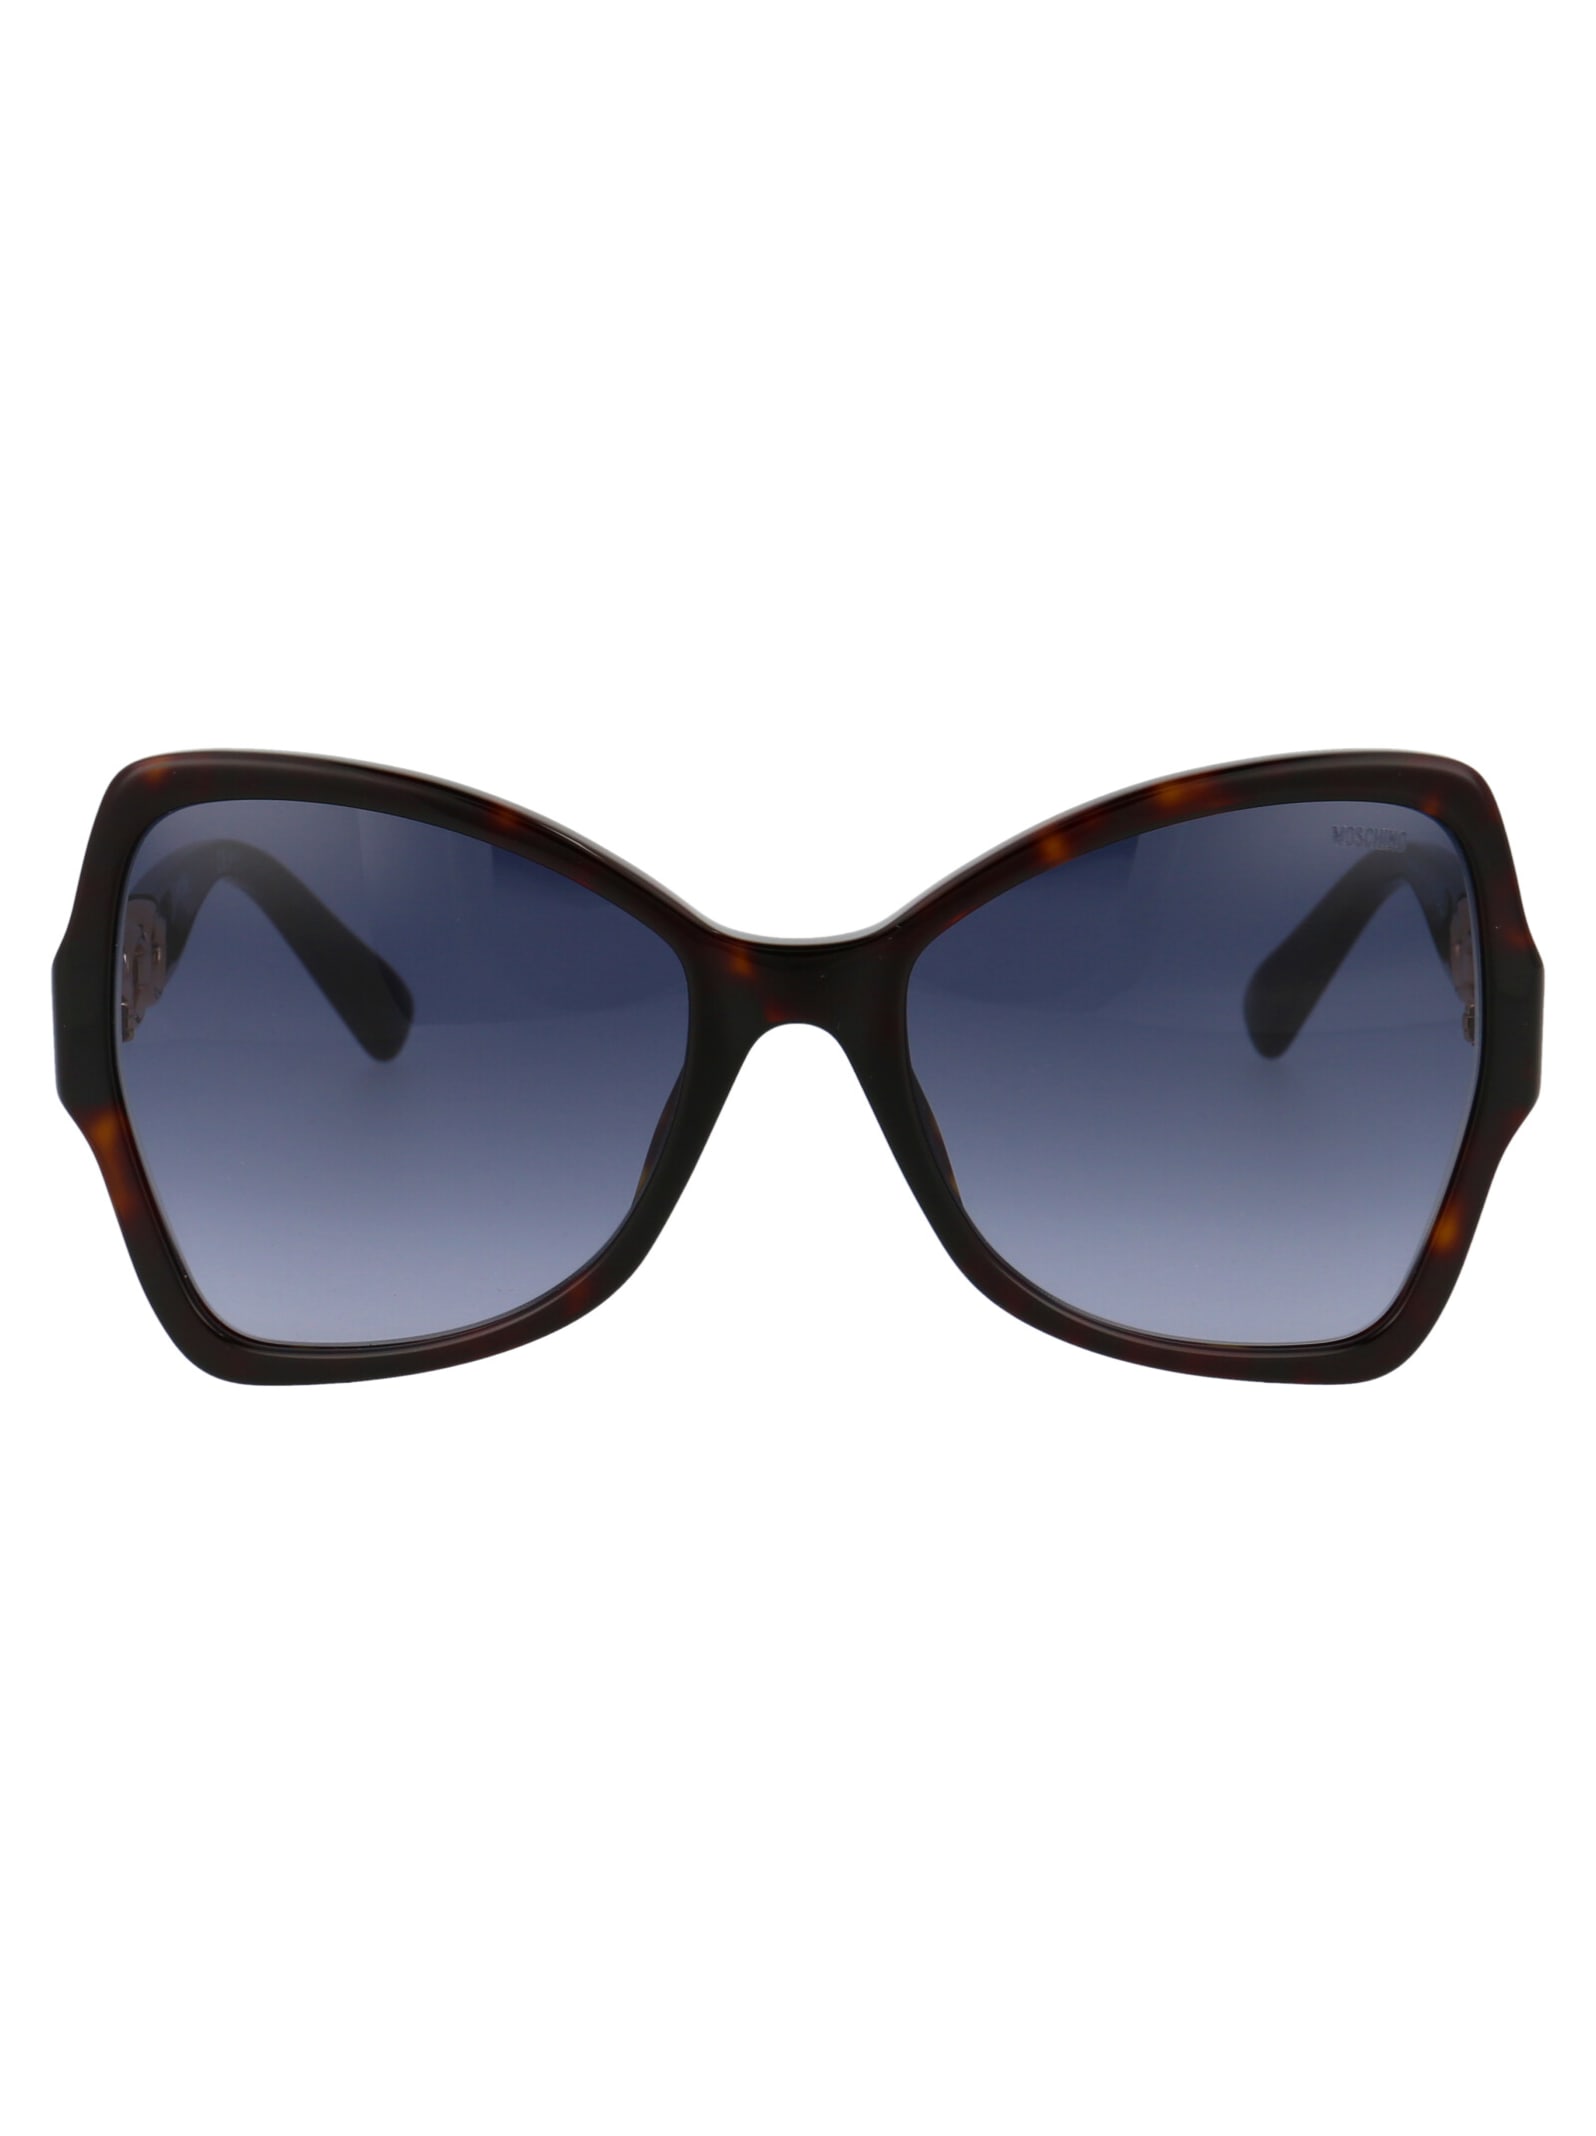 Moschino Mos099/s Sunglasses